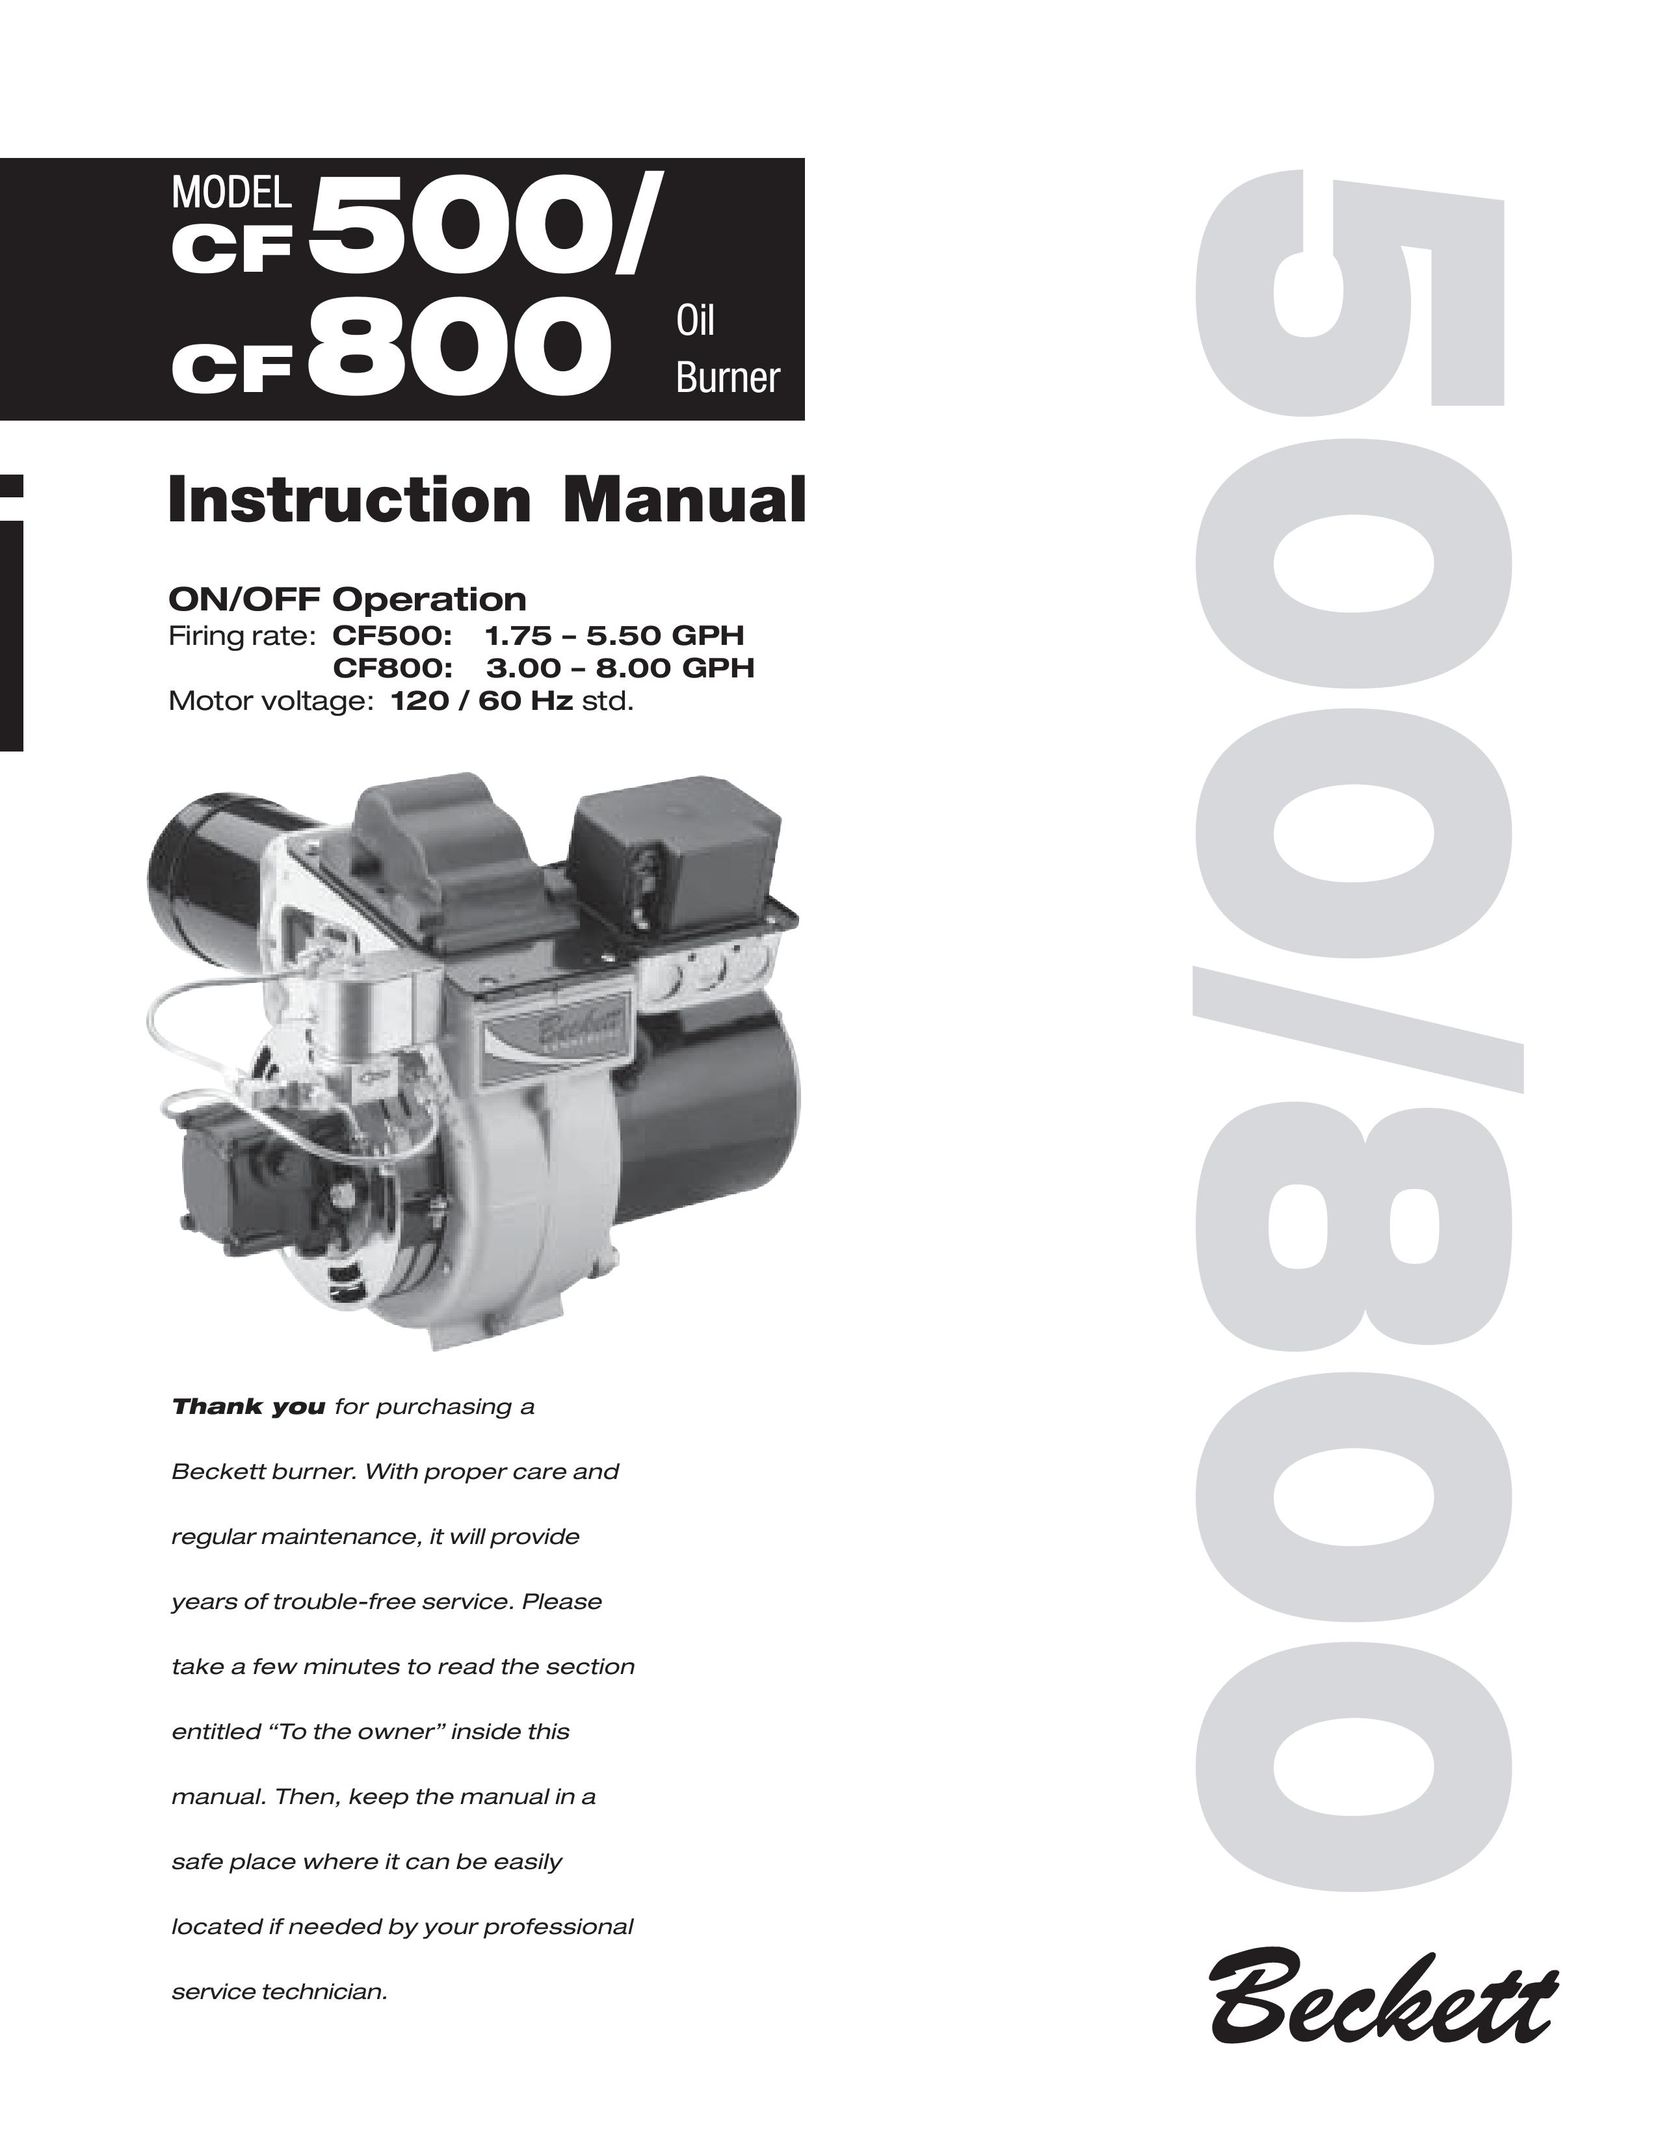 Beckett CF 500/800 Burner User Manual